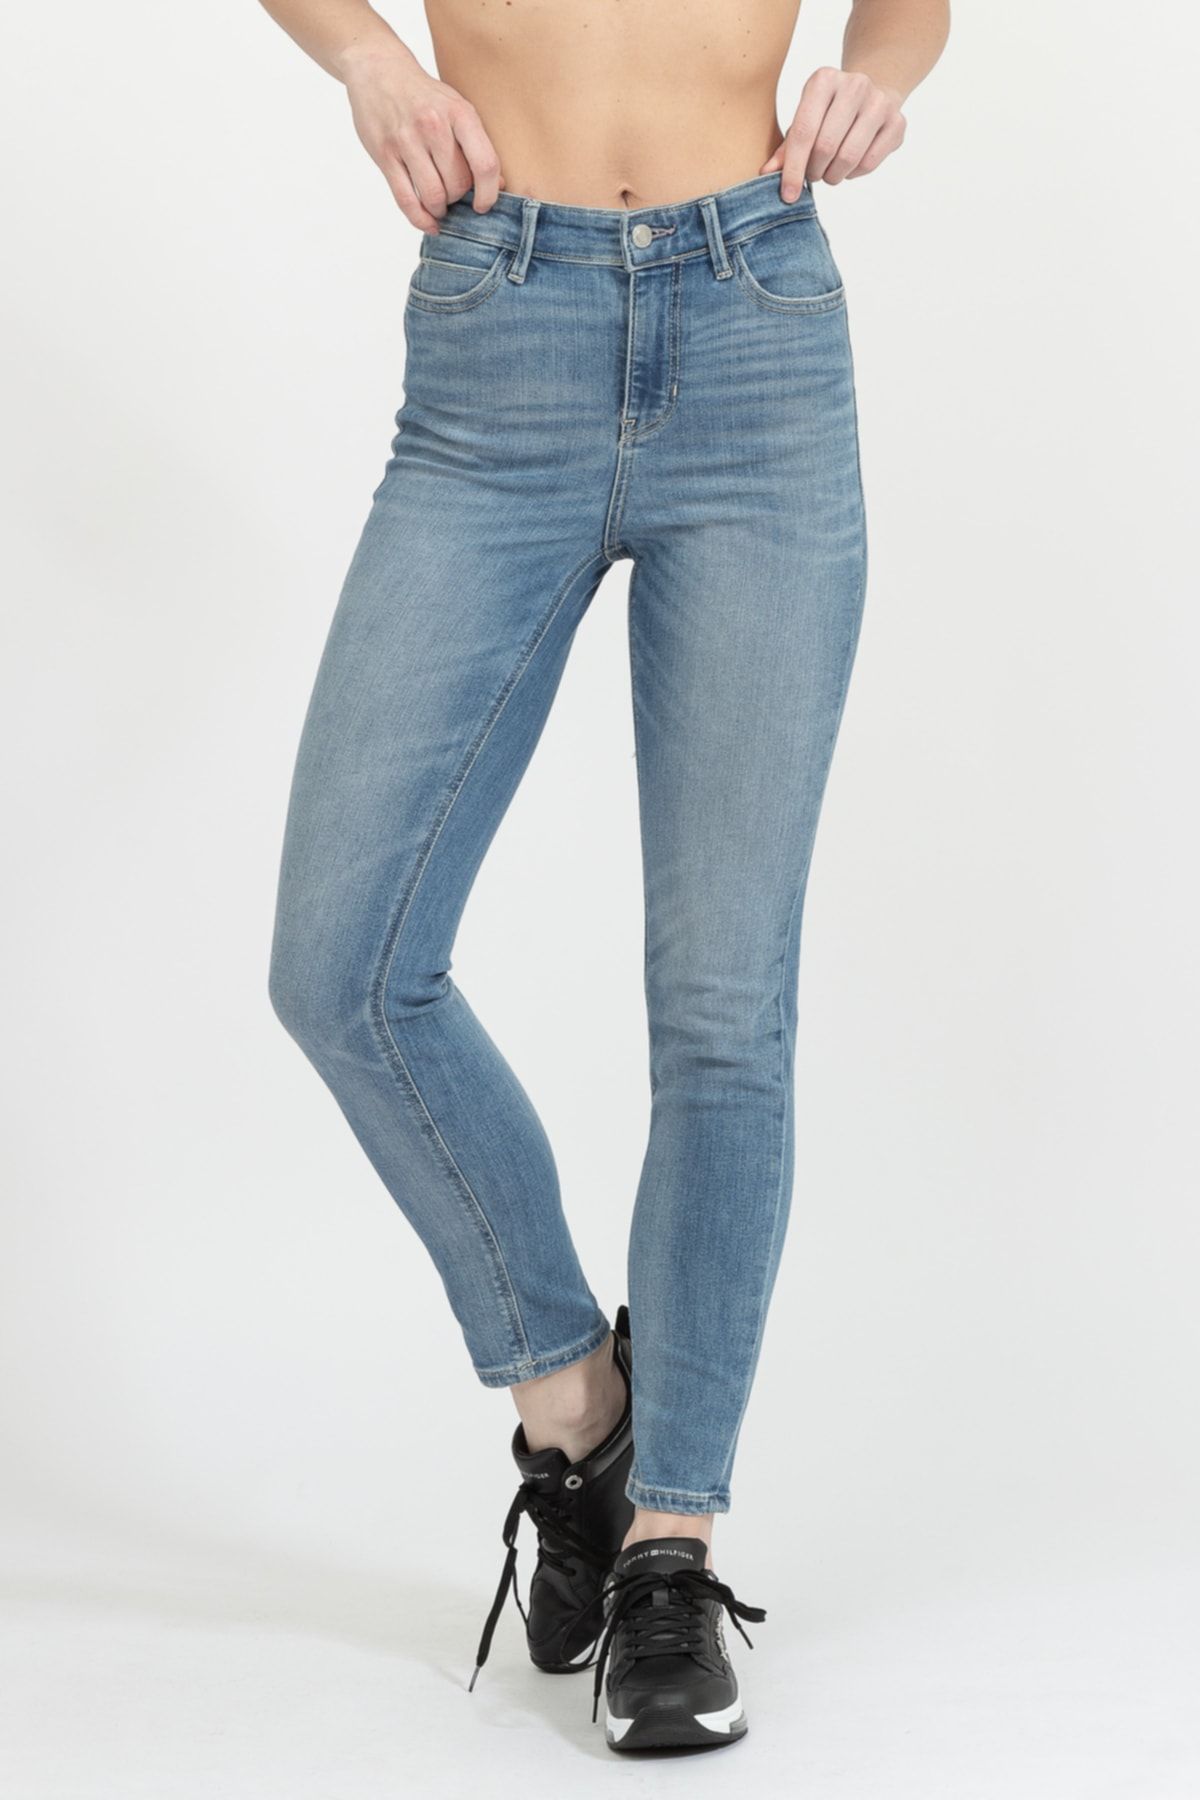 شلوار جین آبی روشن مدل جذب زنانه گس Guess (برند آمریکا)